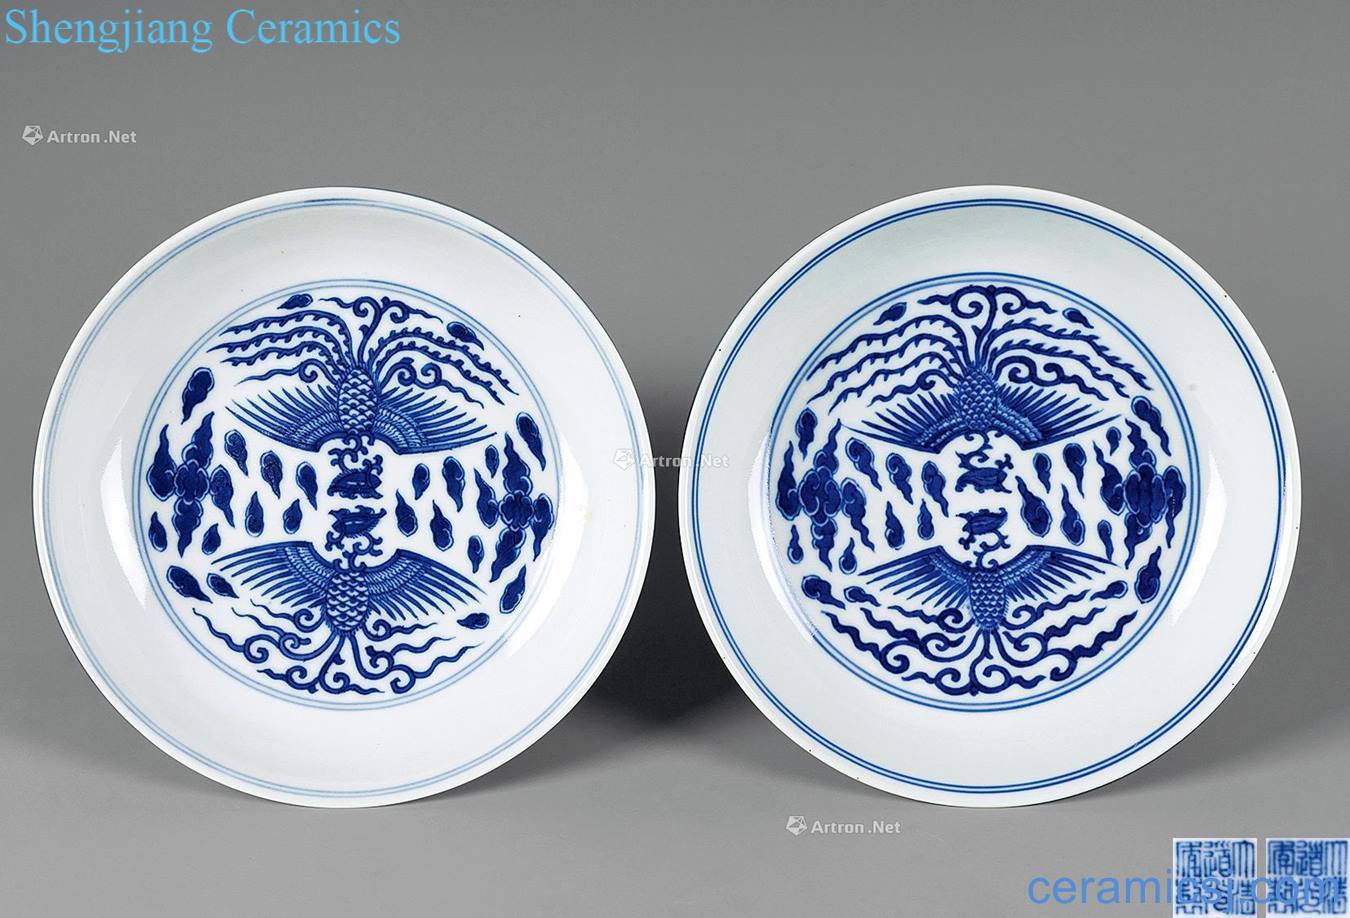 Qing daoguang Kiln porcelain chicken tray (a)